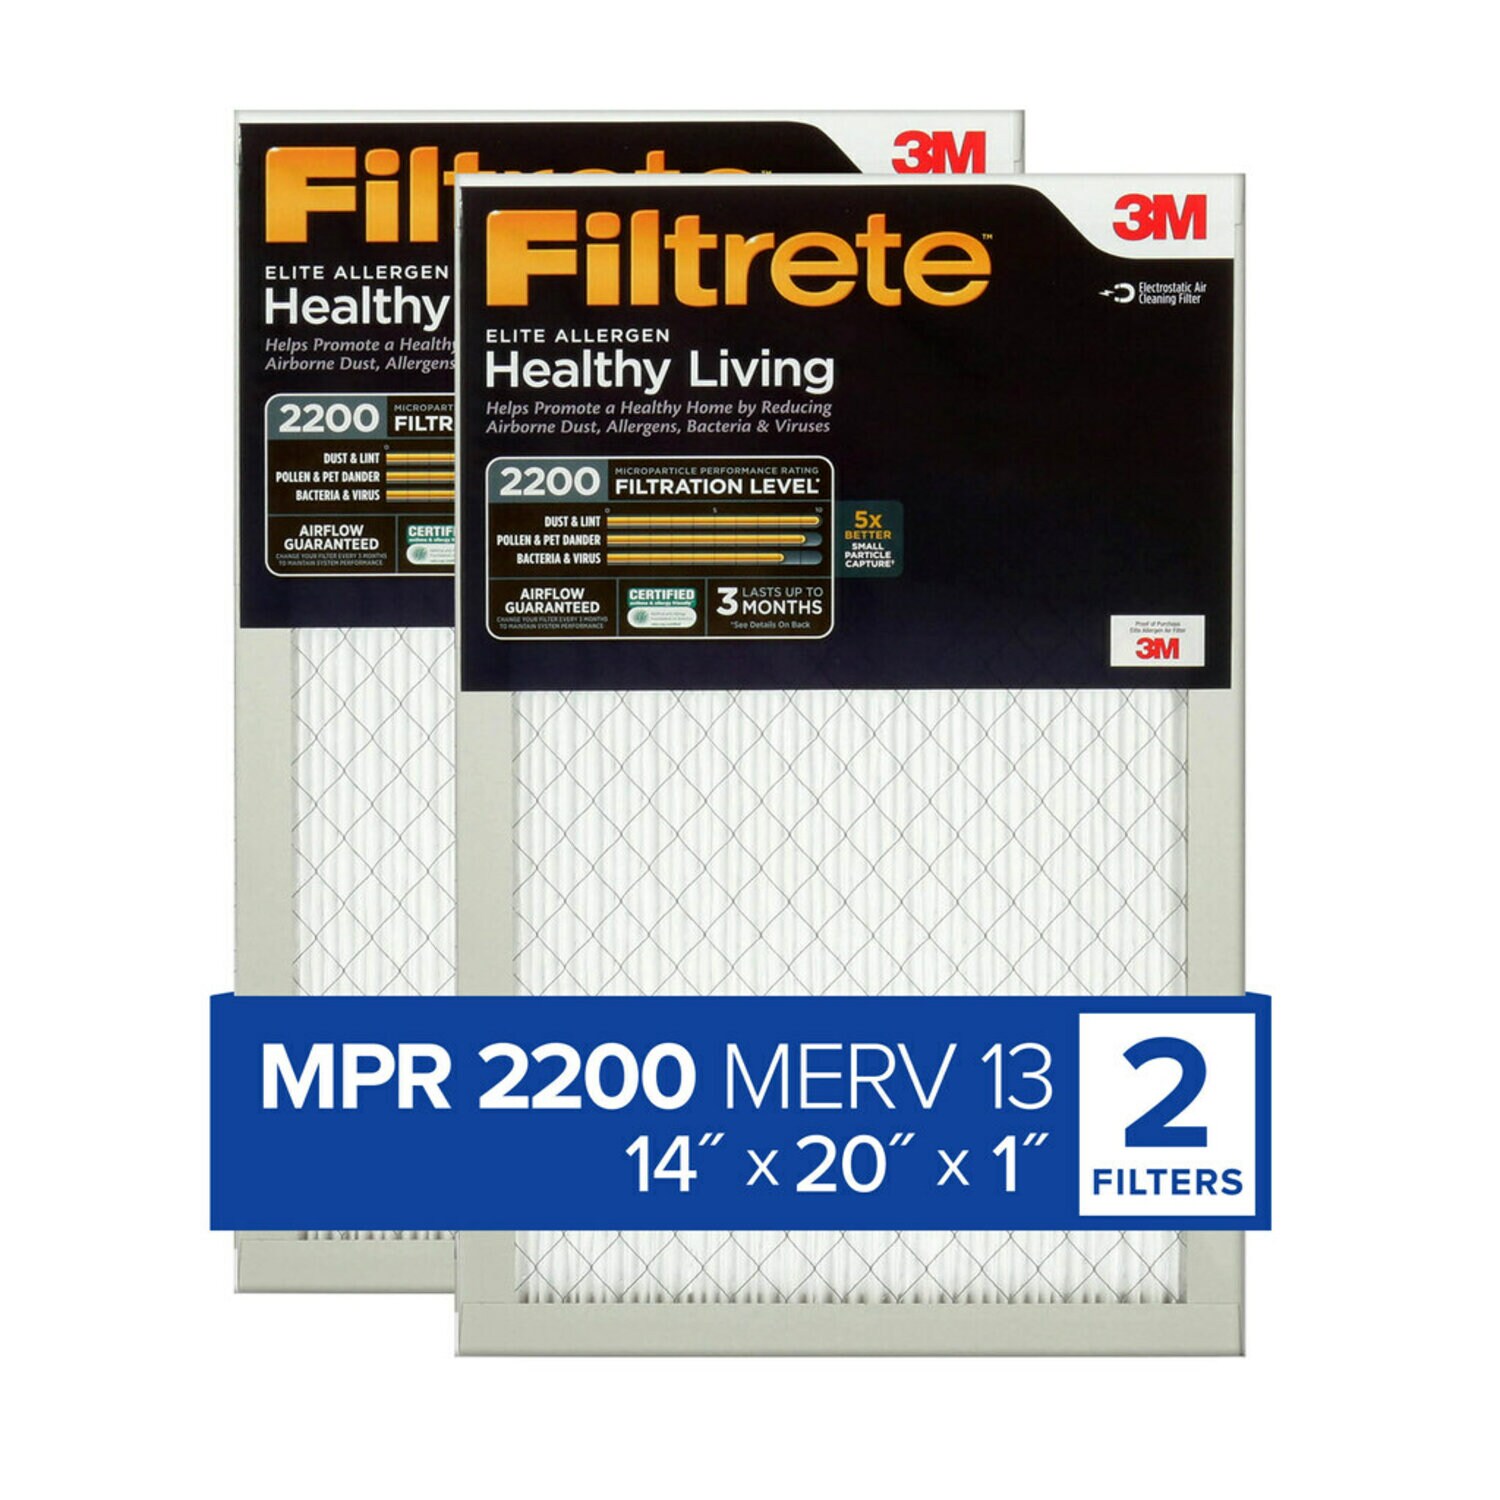 7010377811 - Filtrete Elite Allergen Reduction Filter EA05-2PK-6E, MPR2200, 14 in x
20 in x 1 in (35,5 cm x 50,8 cm x 2,5 cm), 2/pk